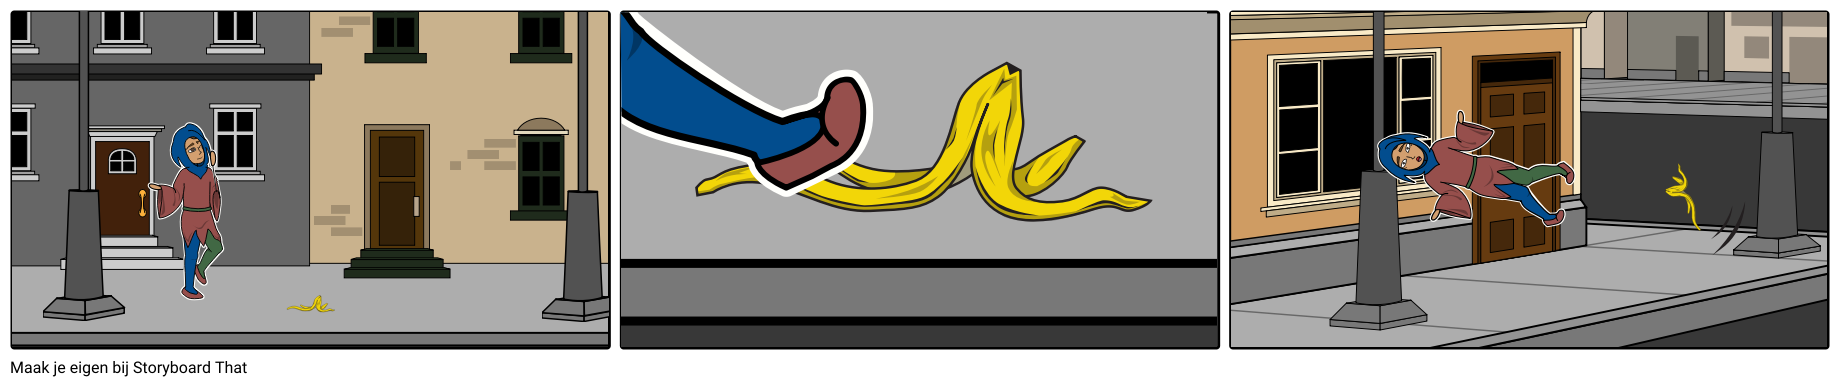 Jester glijdt op bananenschil